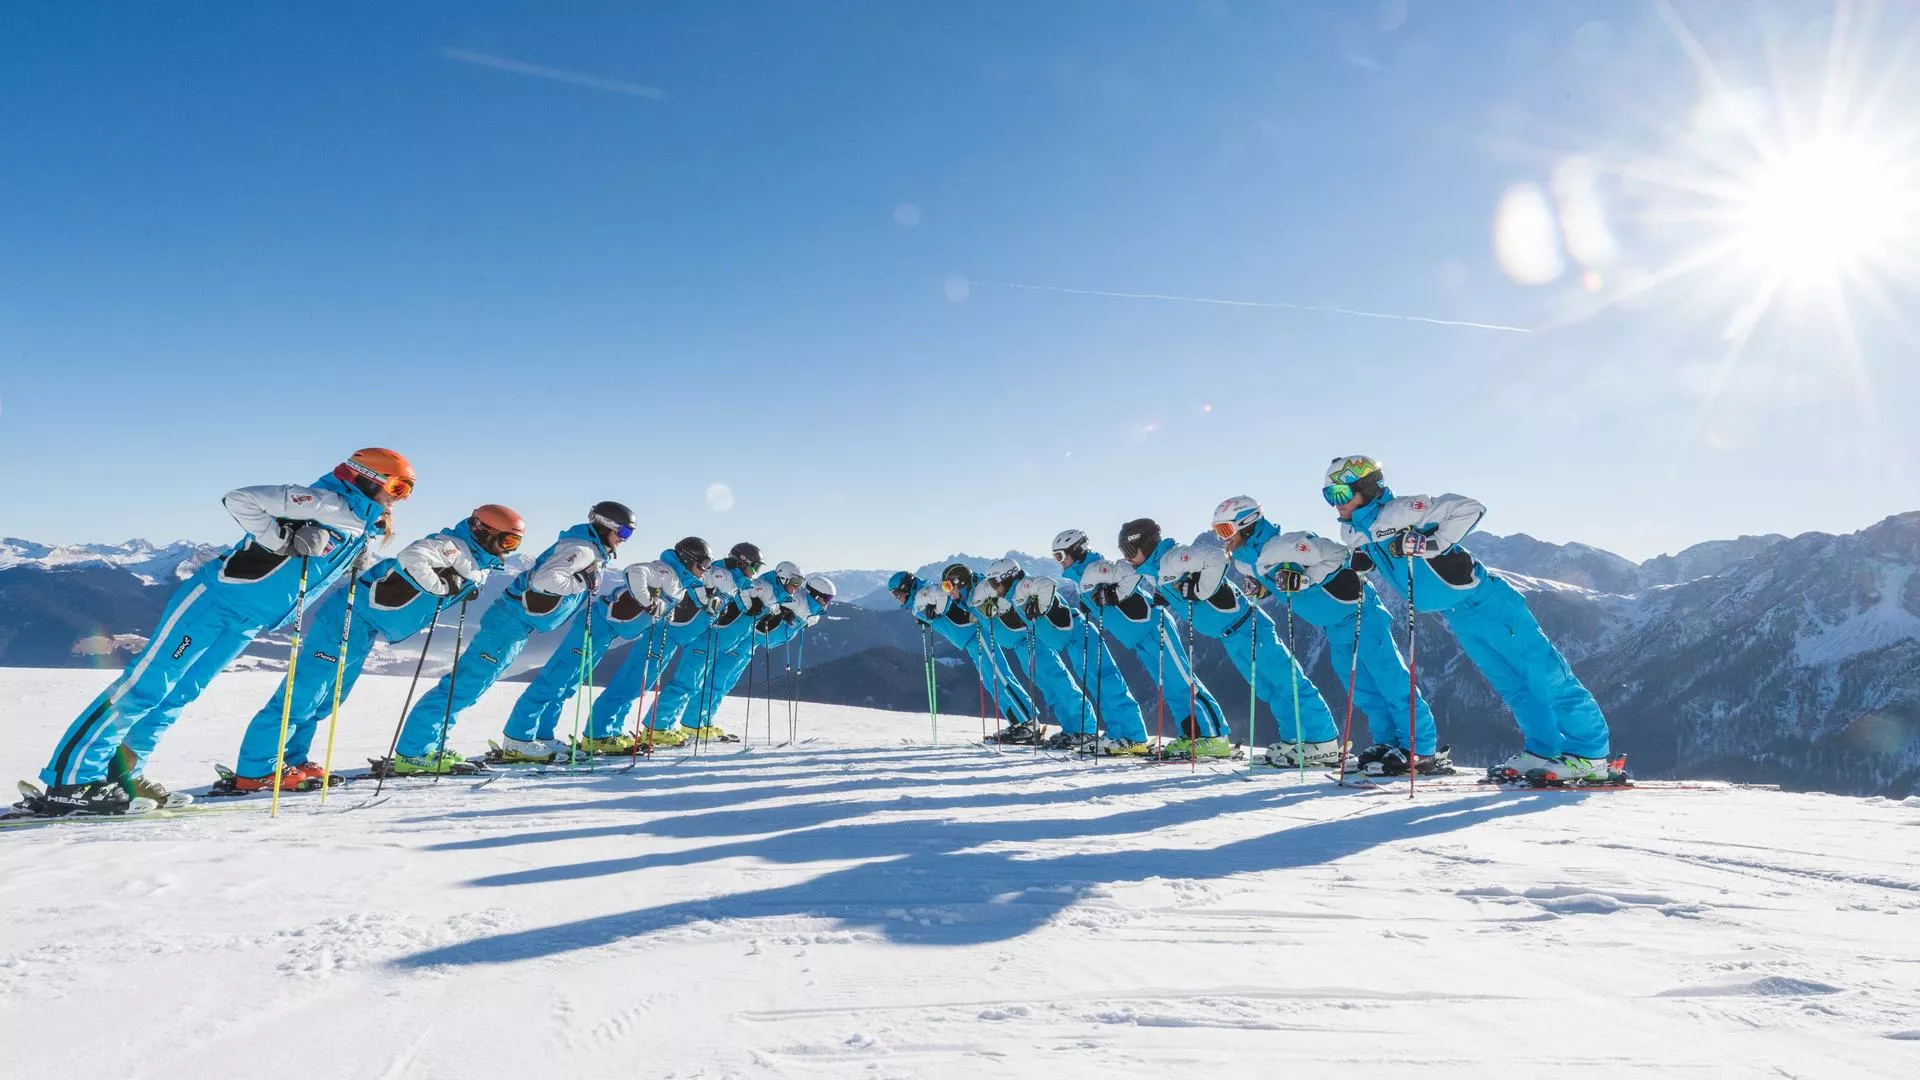 Kronschool Skischule & Snowboardschule in Italy, Europe | Snowboarding,Skiing - Rated 0.9